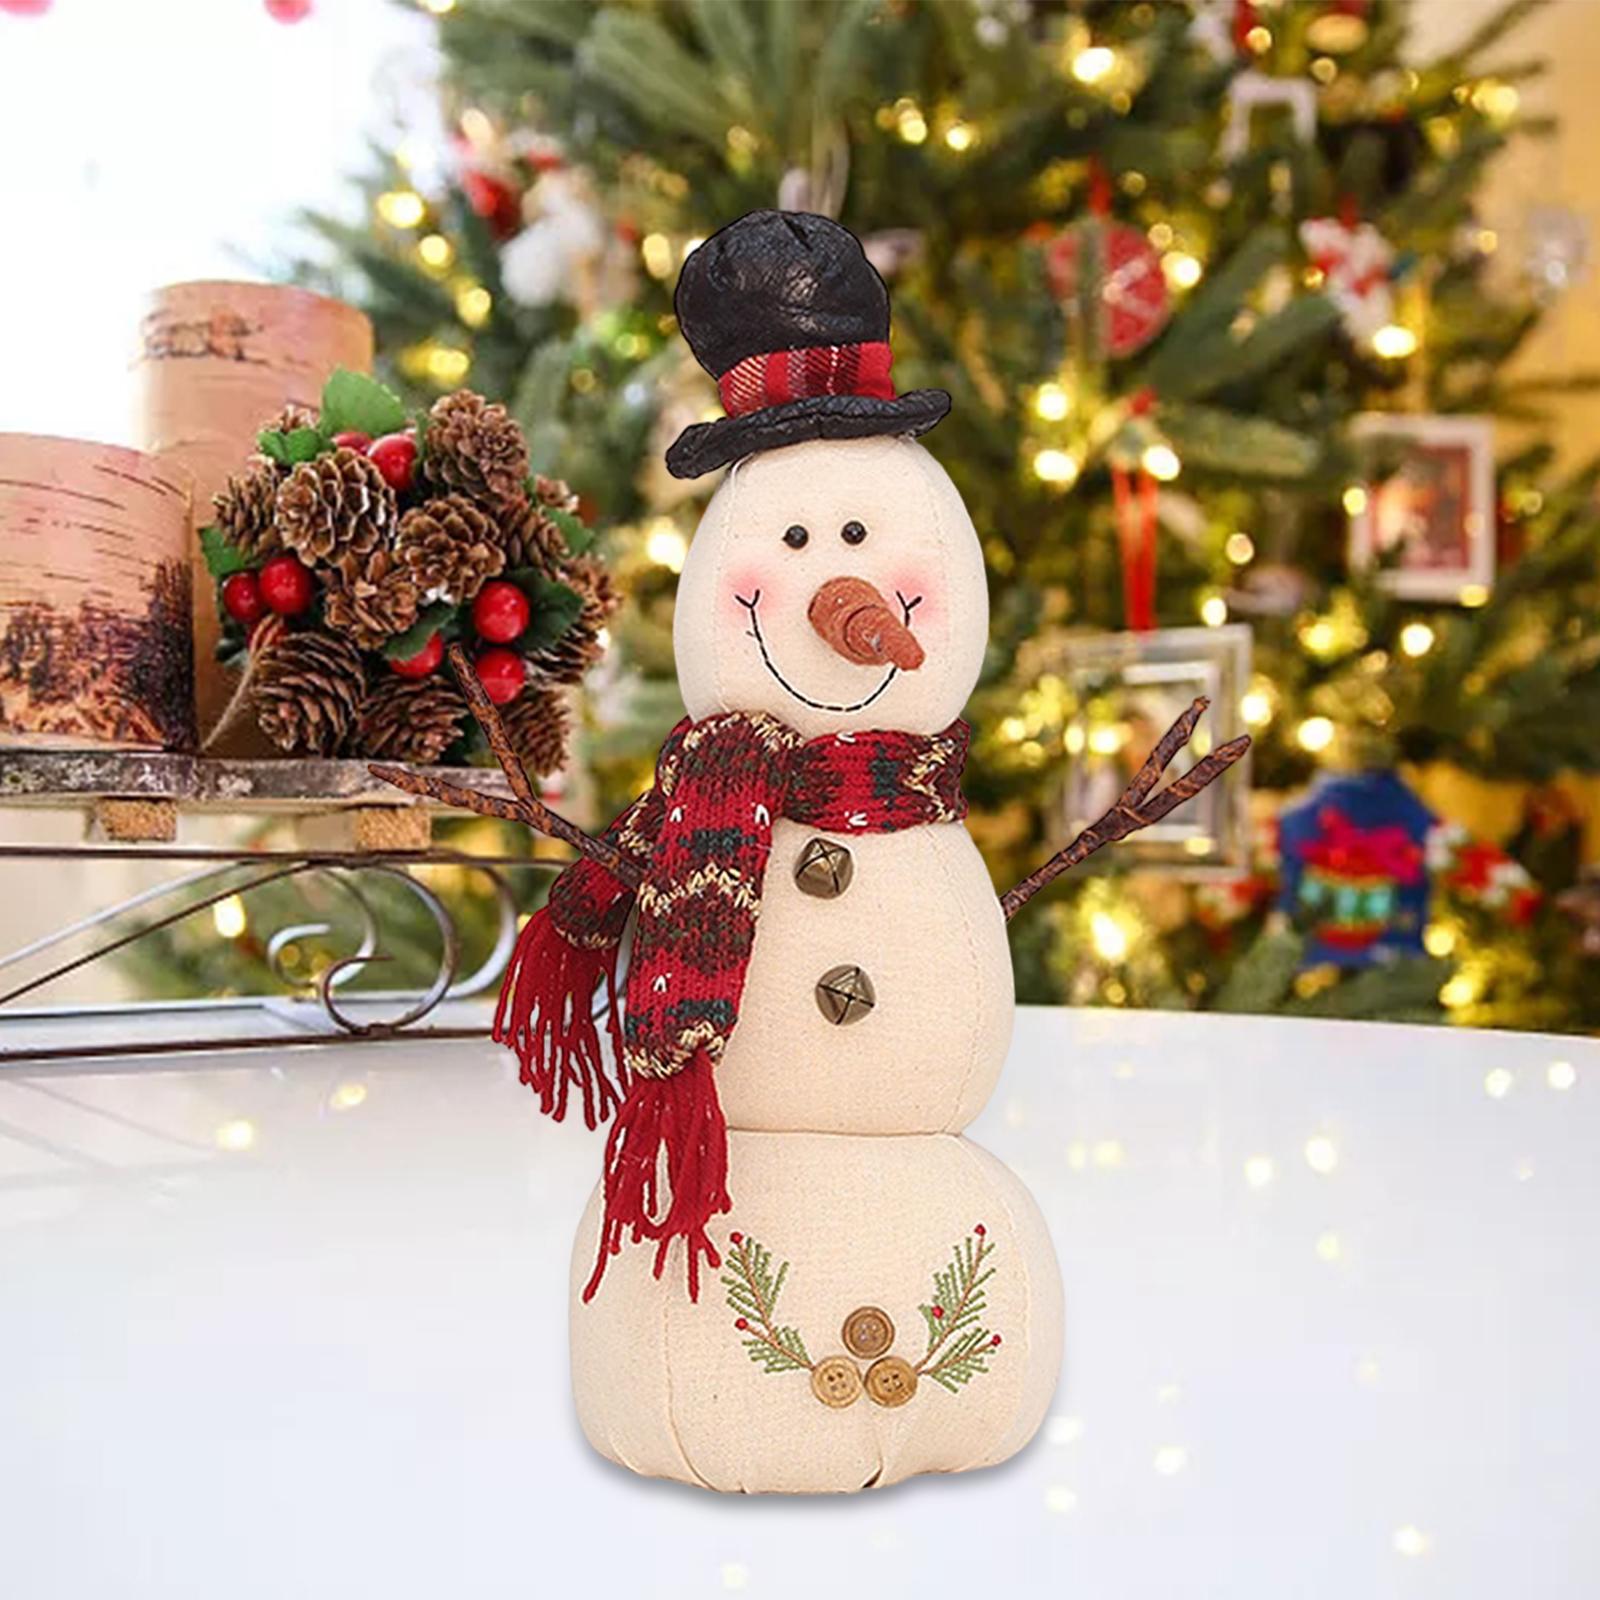 Christmas White Snowman Doll Figurines Plush for Fireplace Atmosphere Decor 15cmx13cmx36cm